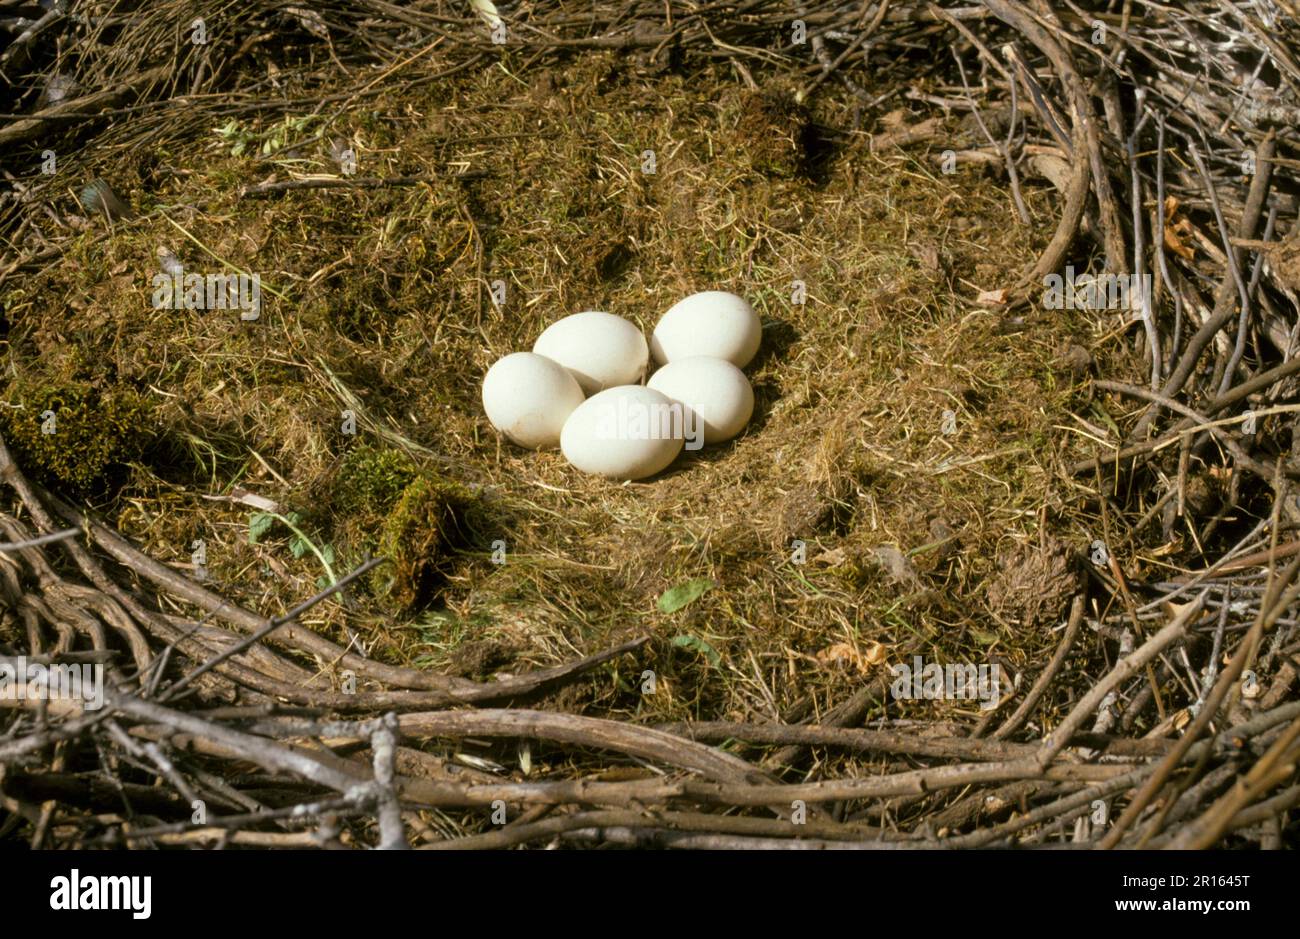 Black Stork black storks (Ciconia nigra), Black Storks, Stork, Animals, Birds, Black Stork Nest with eggs, Spain Stock Photo